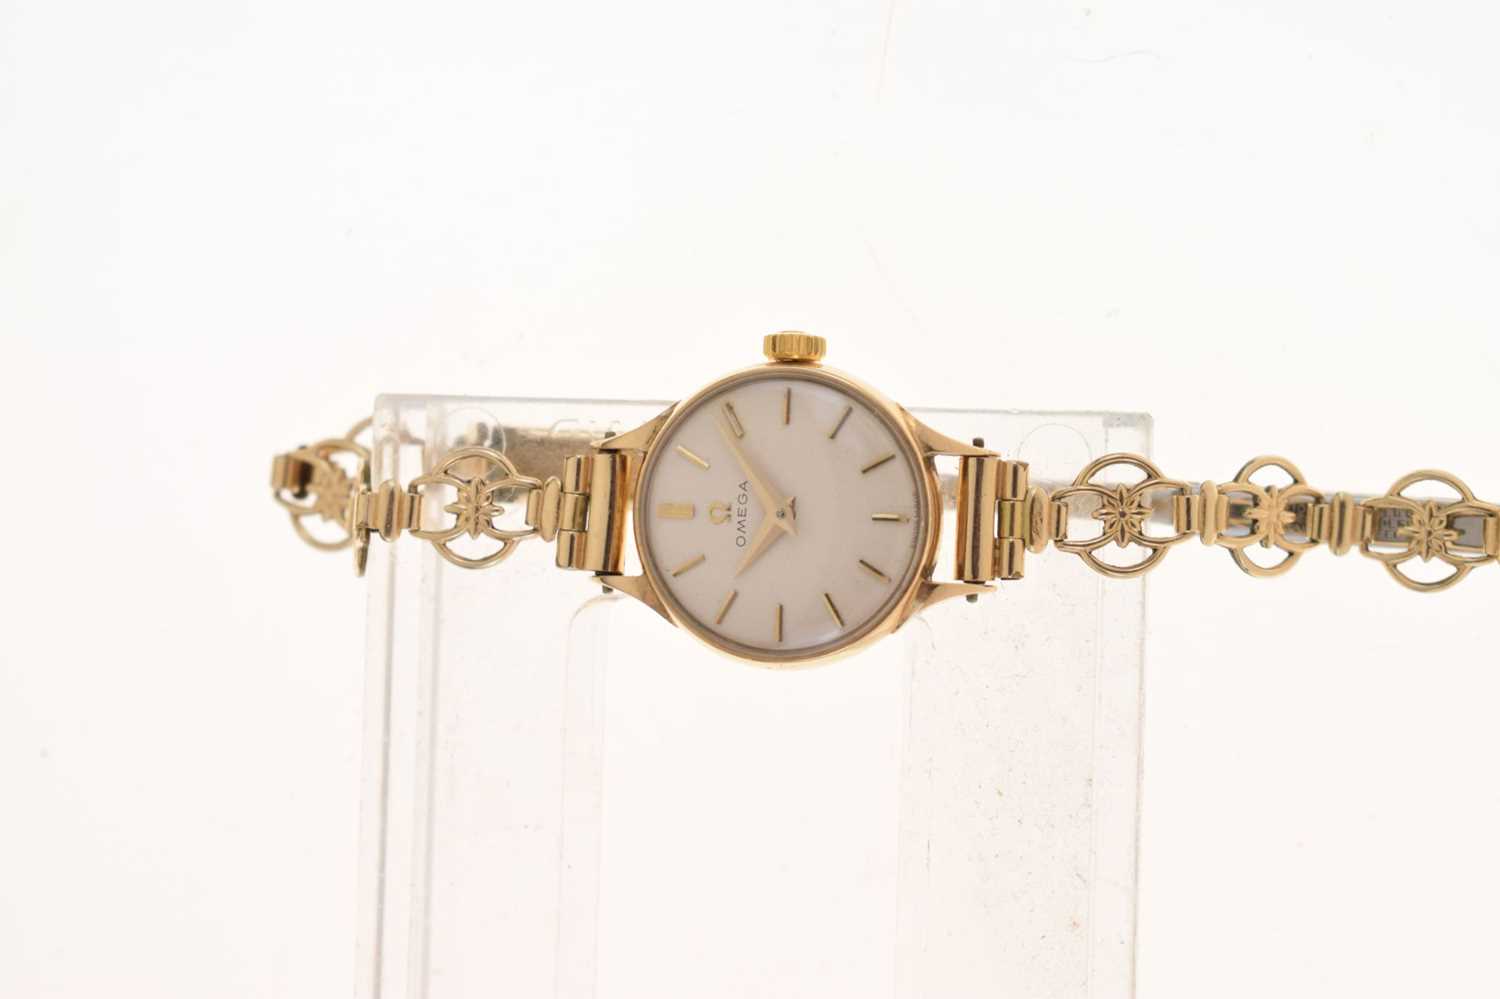 Omega - Lady's 9ct gold cased bracelet watch - Image 8 of 8